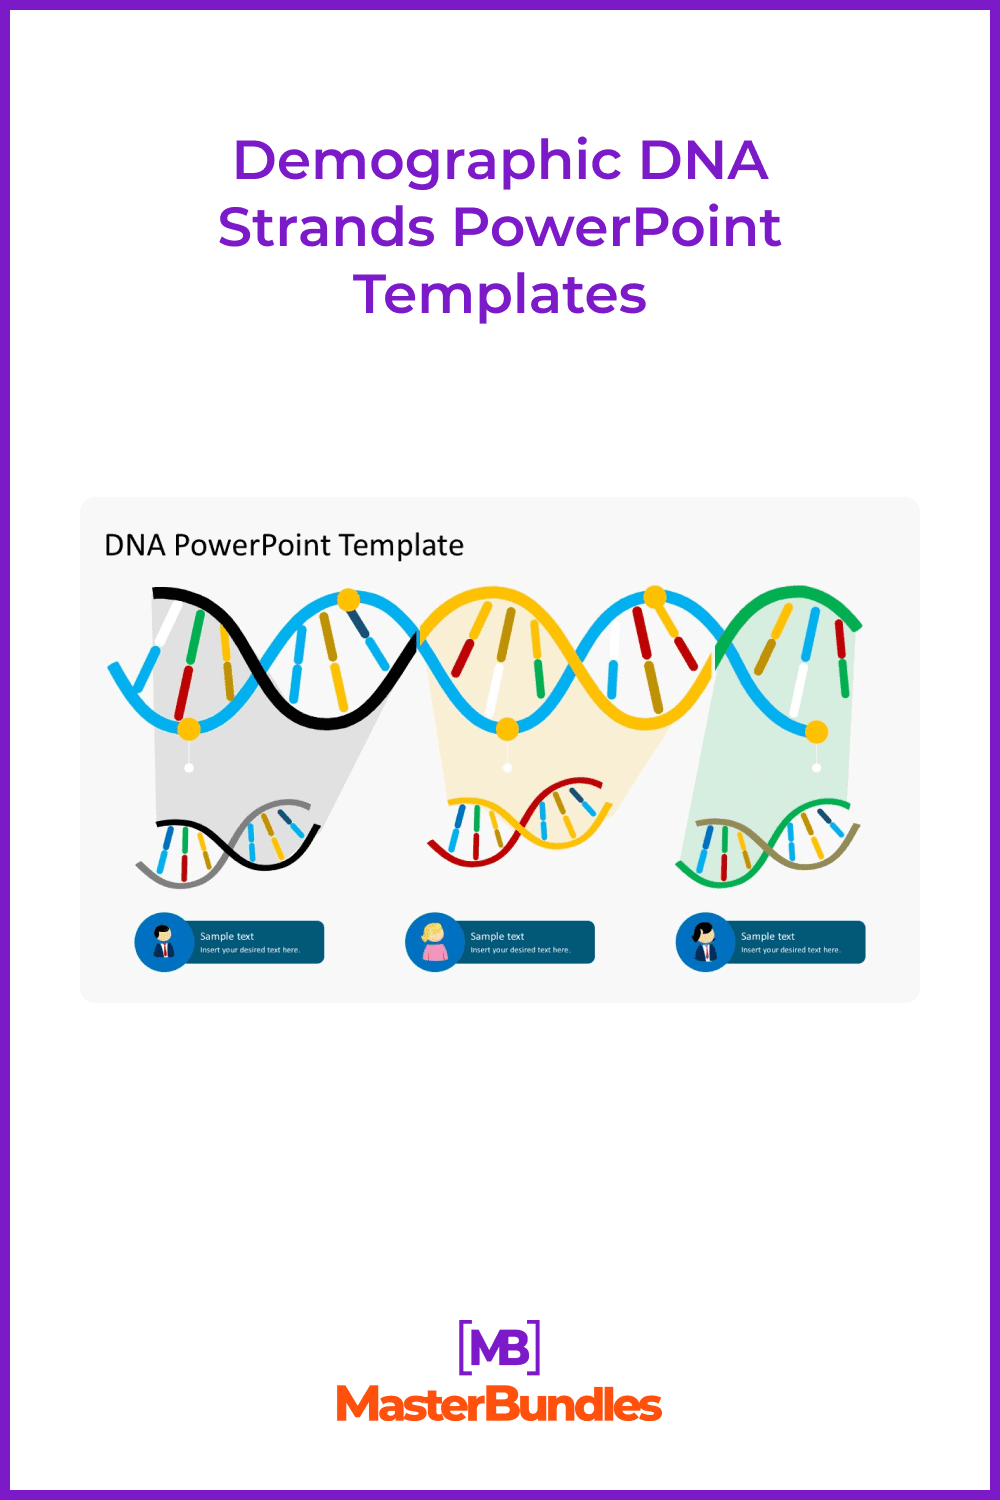 Demographic DNA strands powerpoint templates.